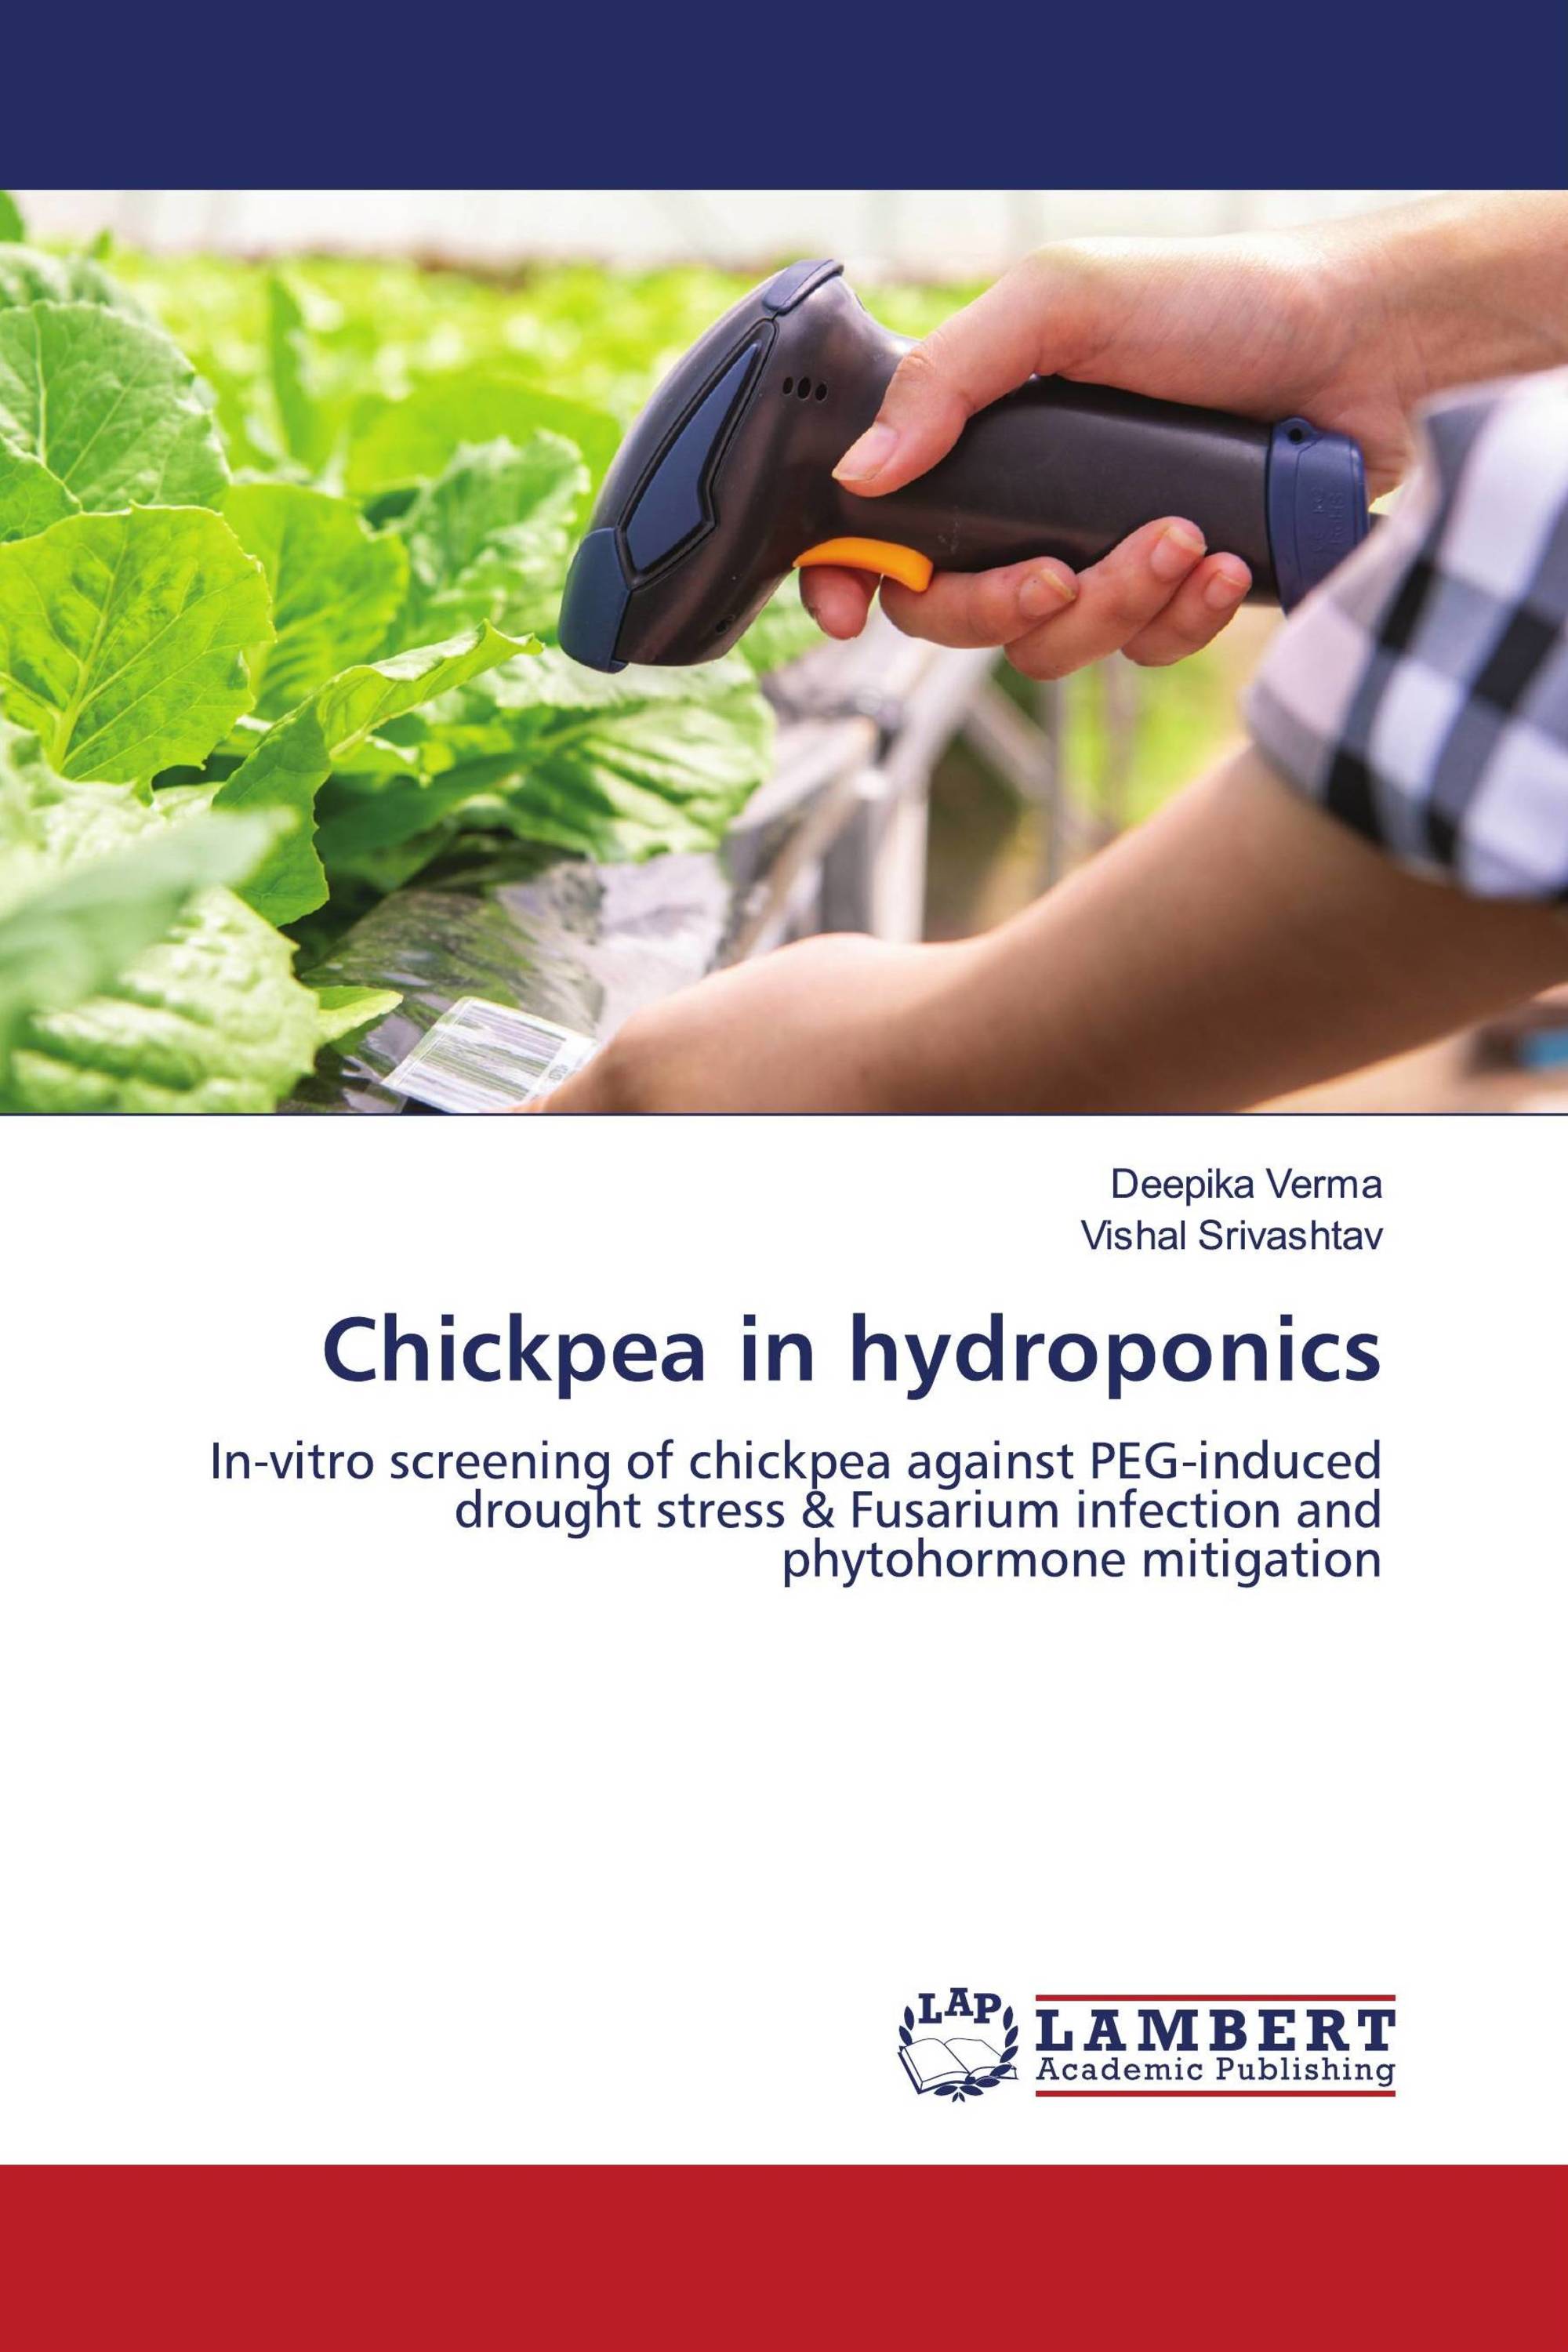 Chickpea in hydroponics